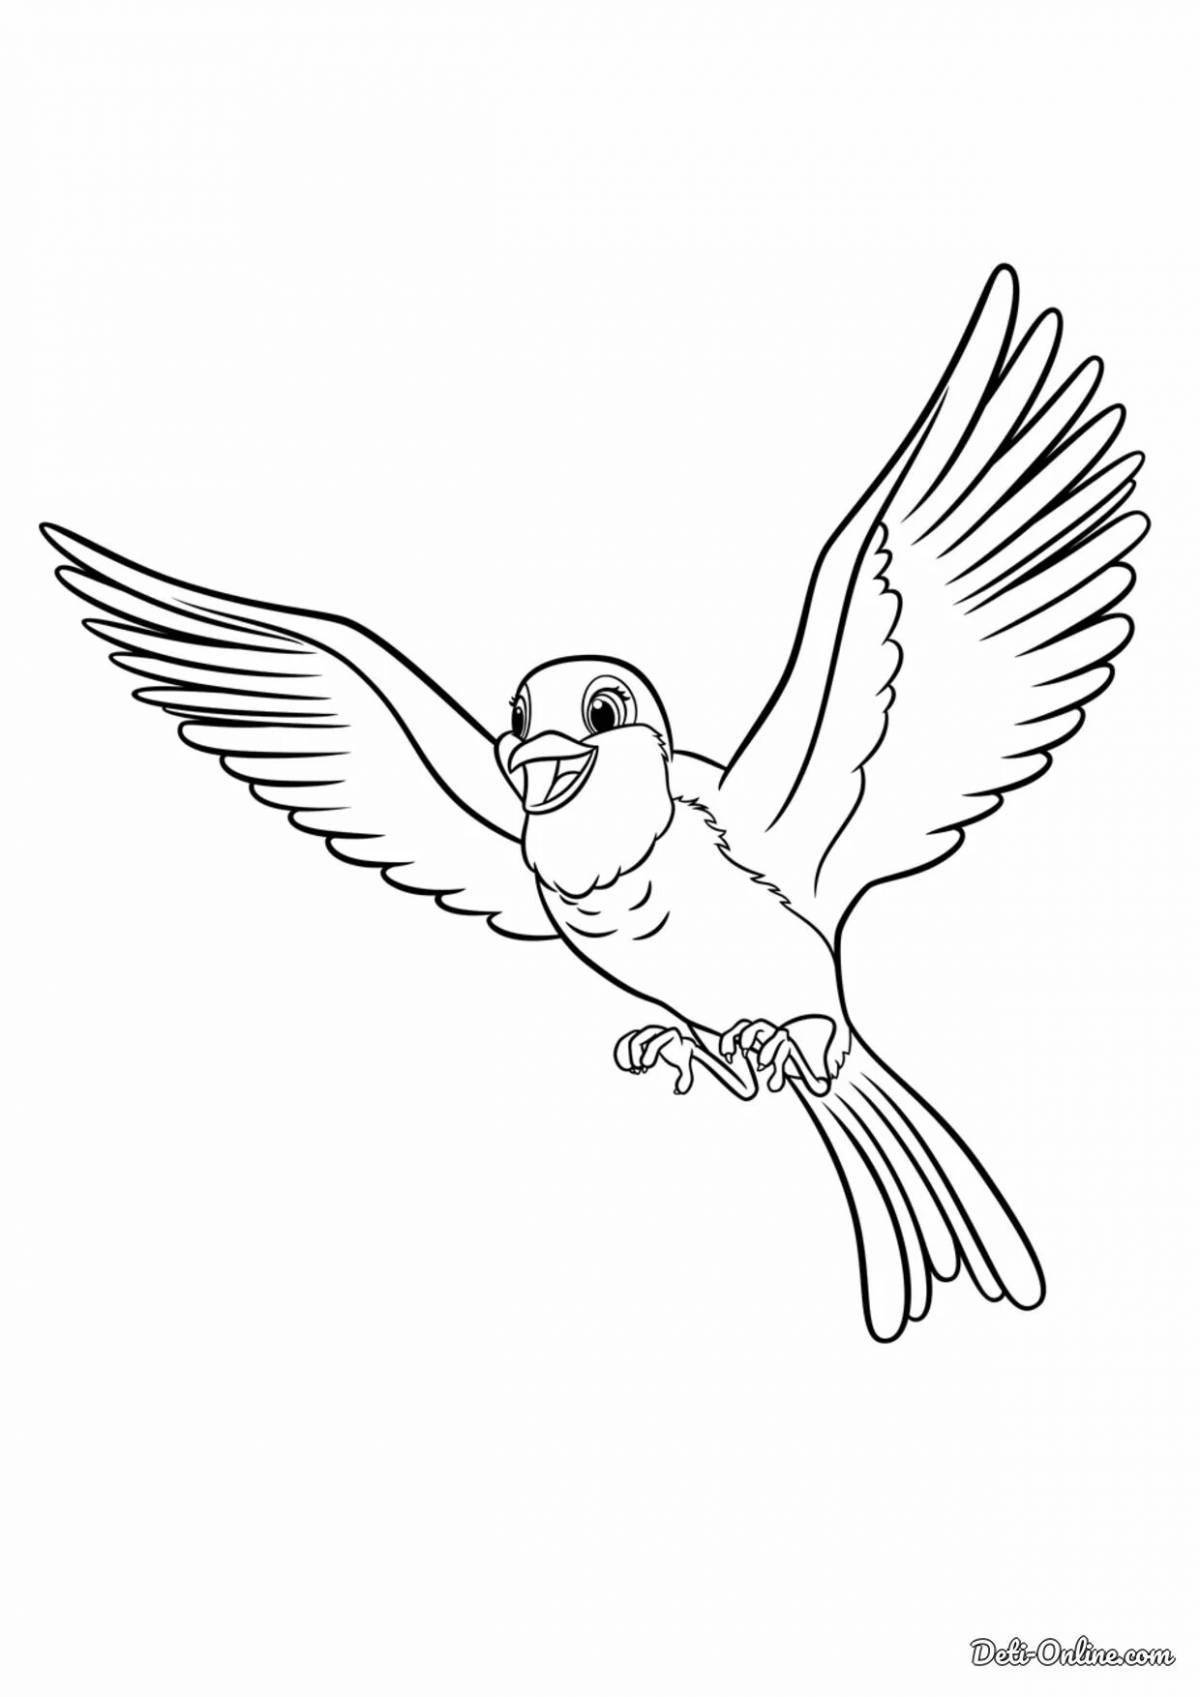 Coloring page elegant flying bird